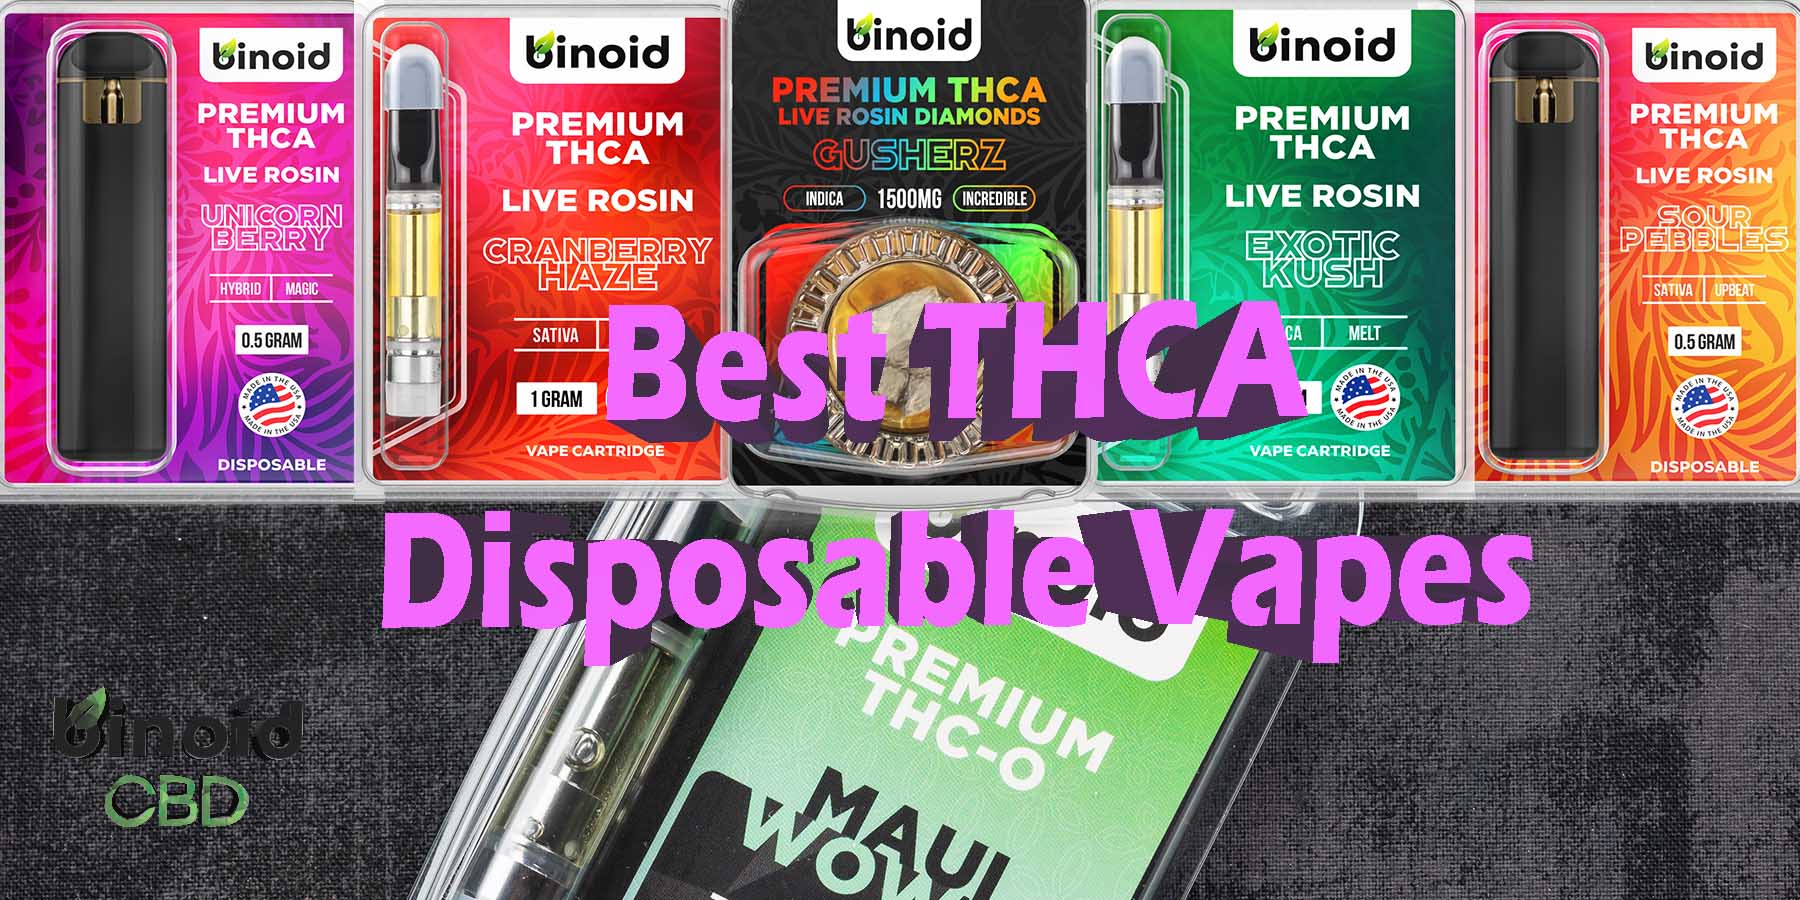 Best THCA Disposable Vapes 1gram 2gram Buy Online Best Brand Strongest Get Near Me Where To Get Binoid